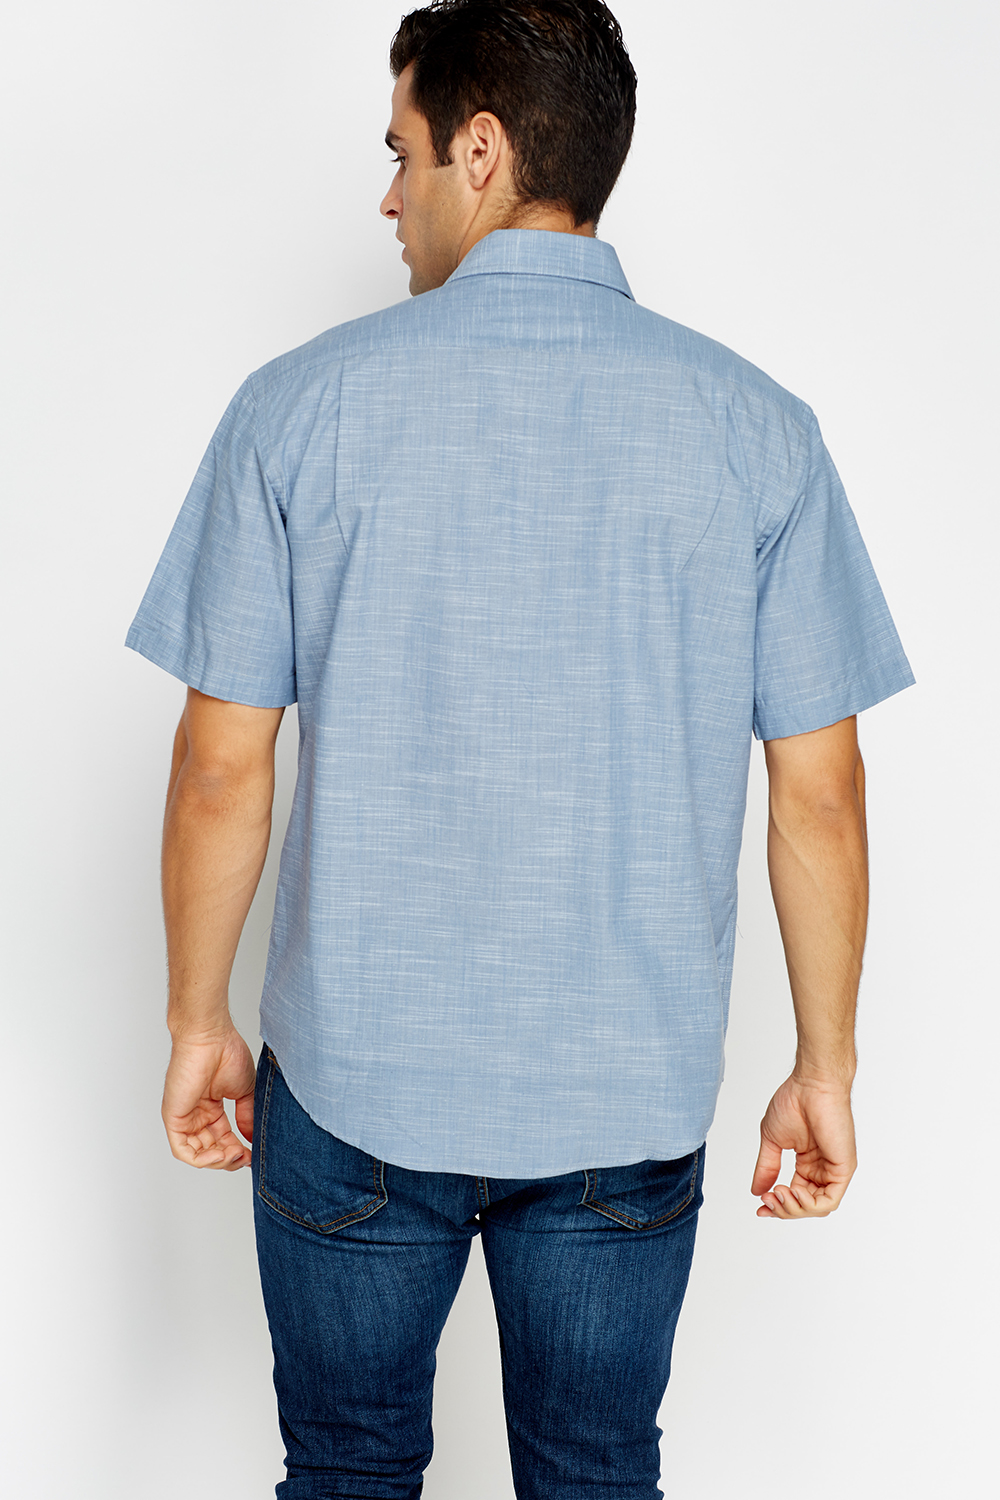 Blue Short Sleeves Shirt - Just $7